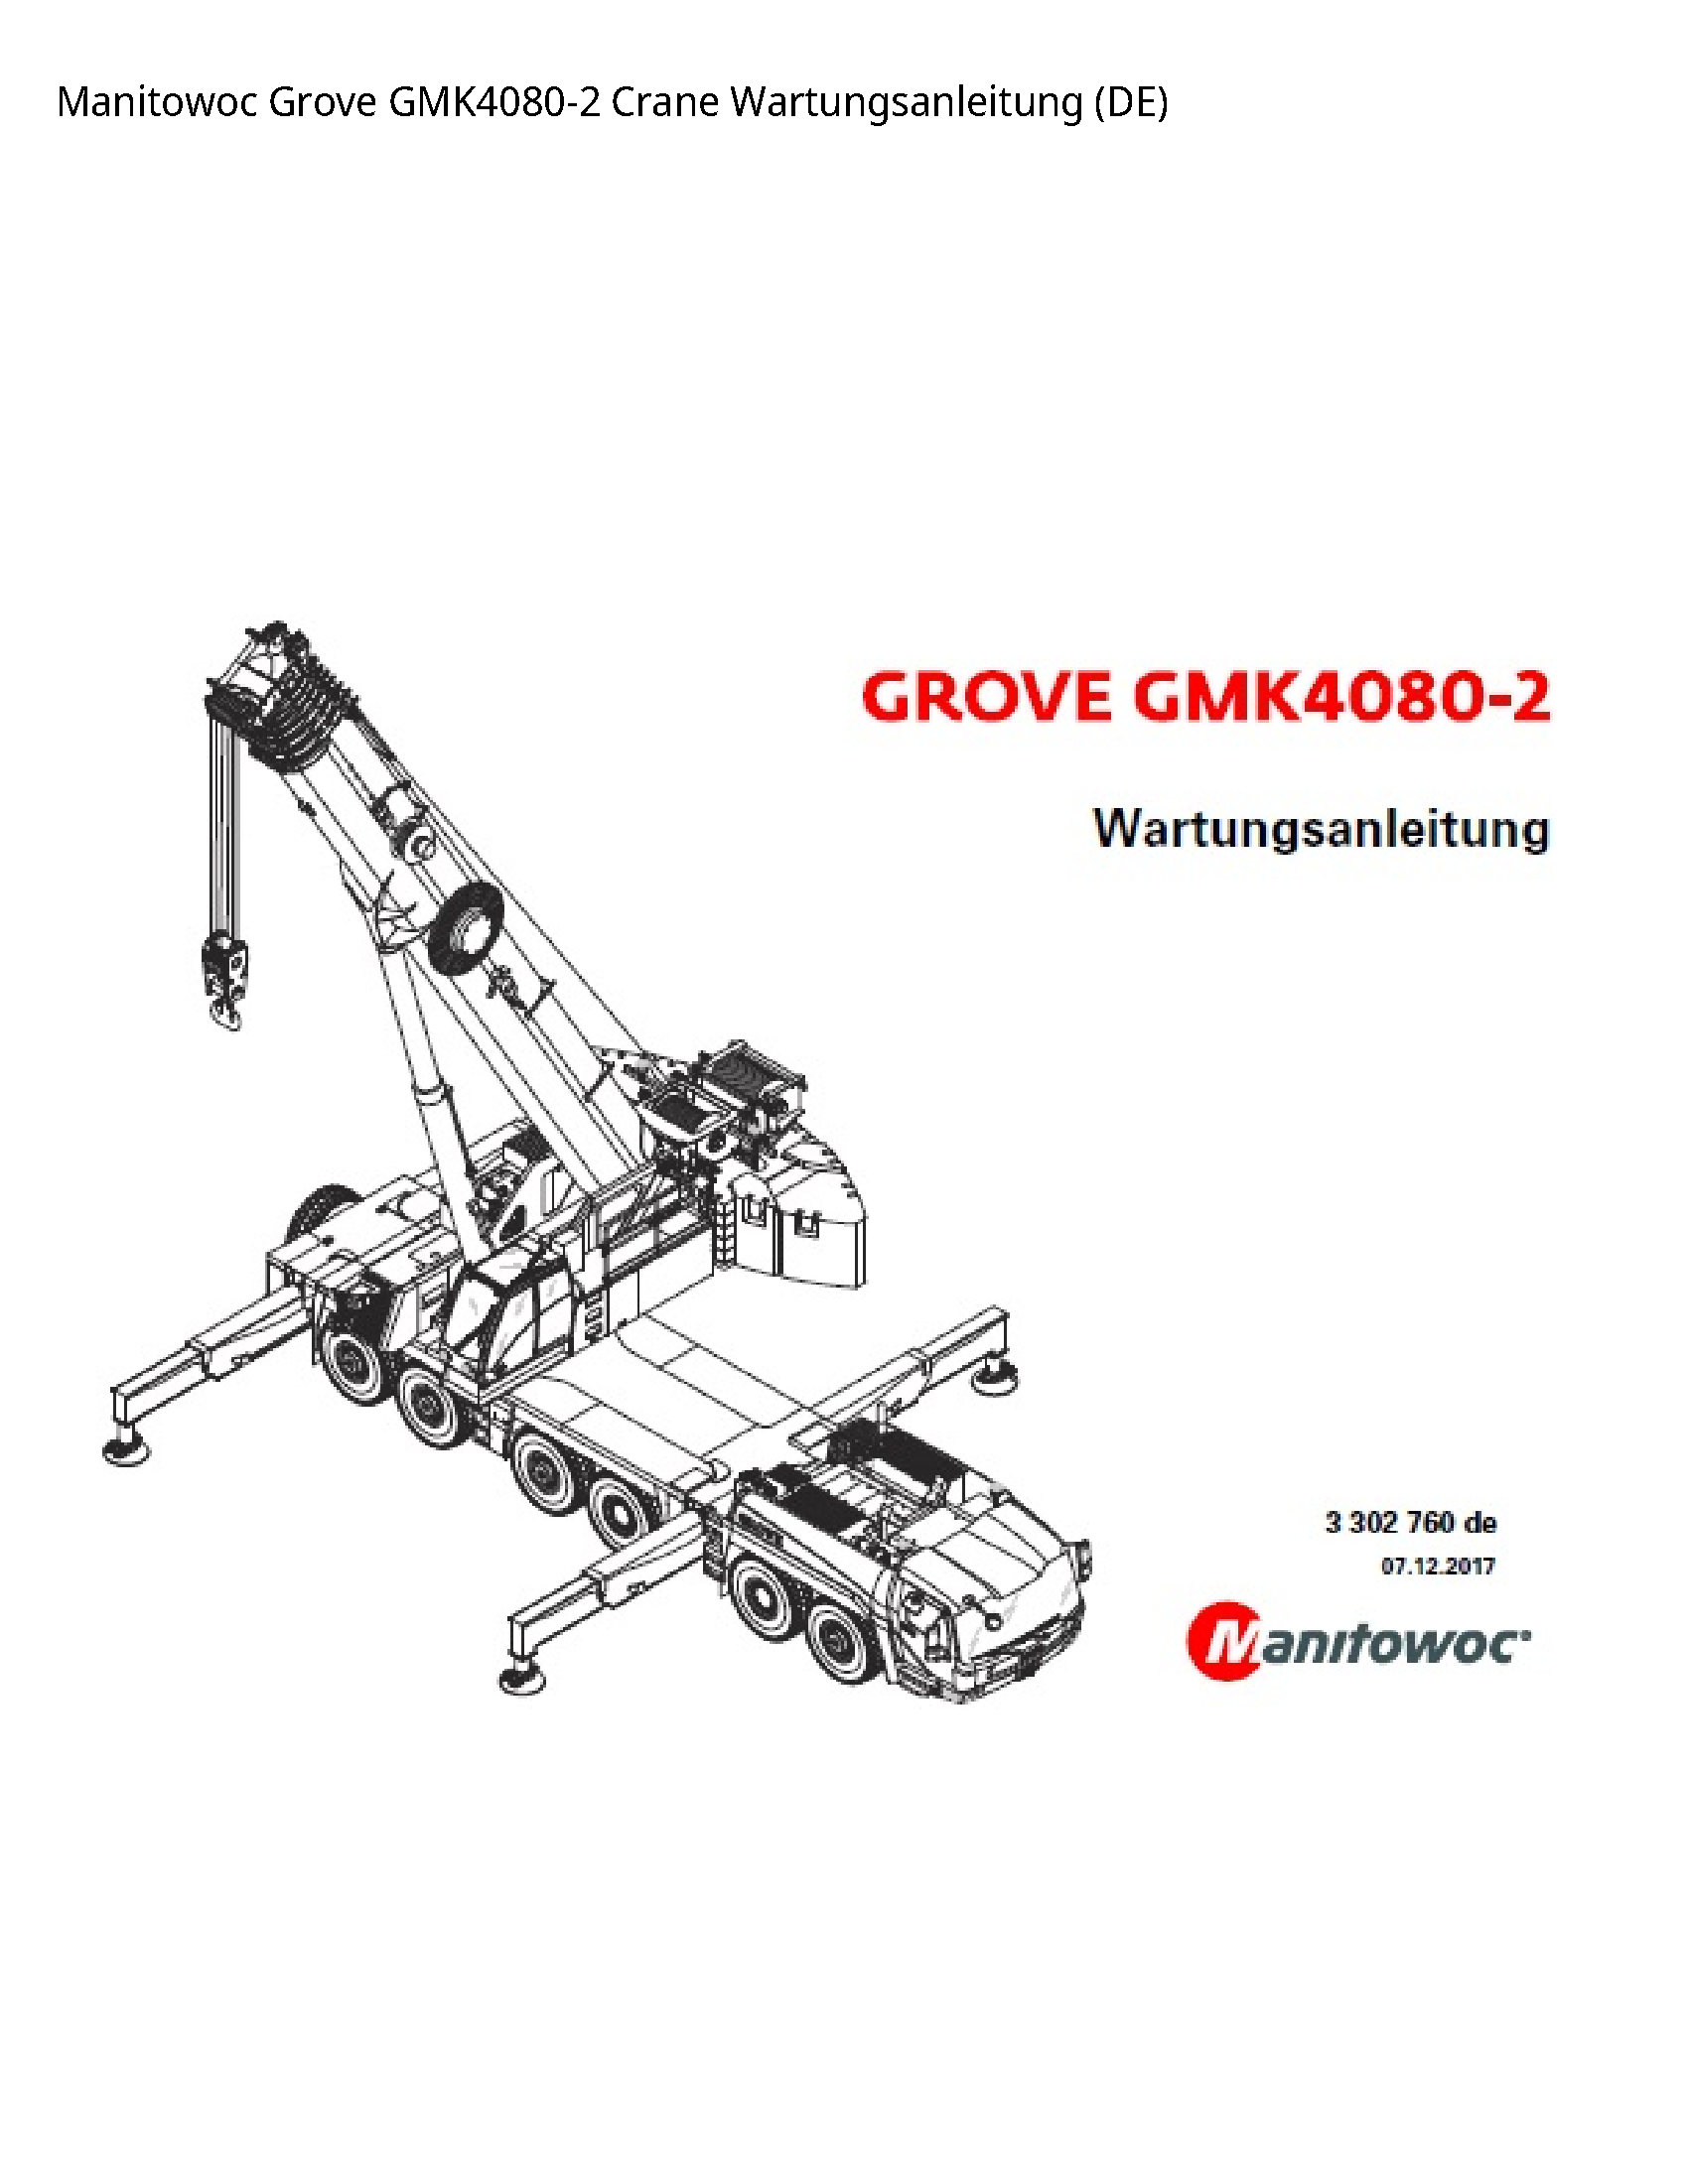 Manitowoc GMK4080-2 Grove Crane Wartungsanleitung (DE) manual